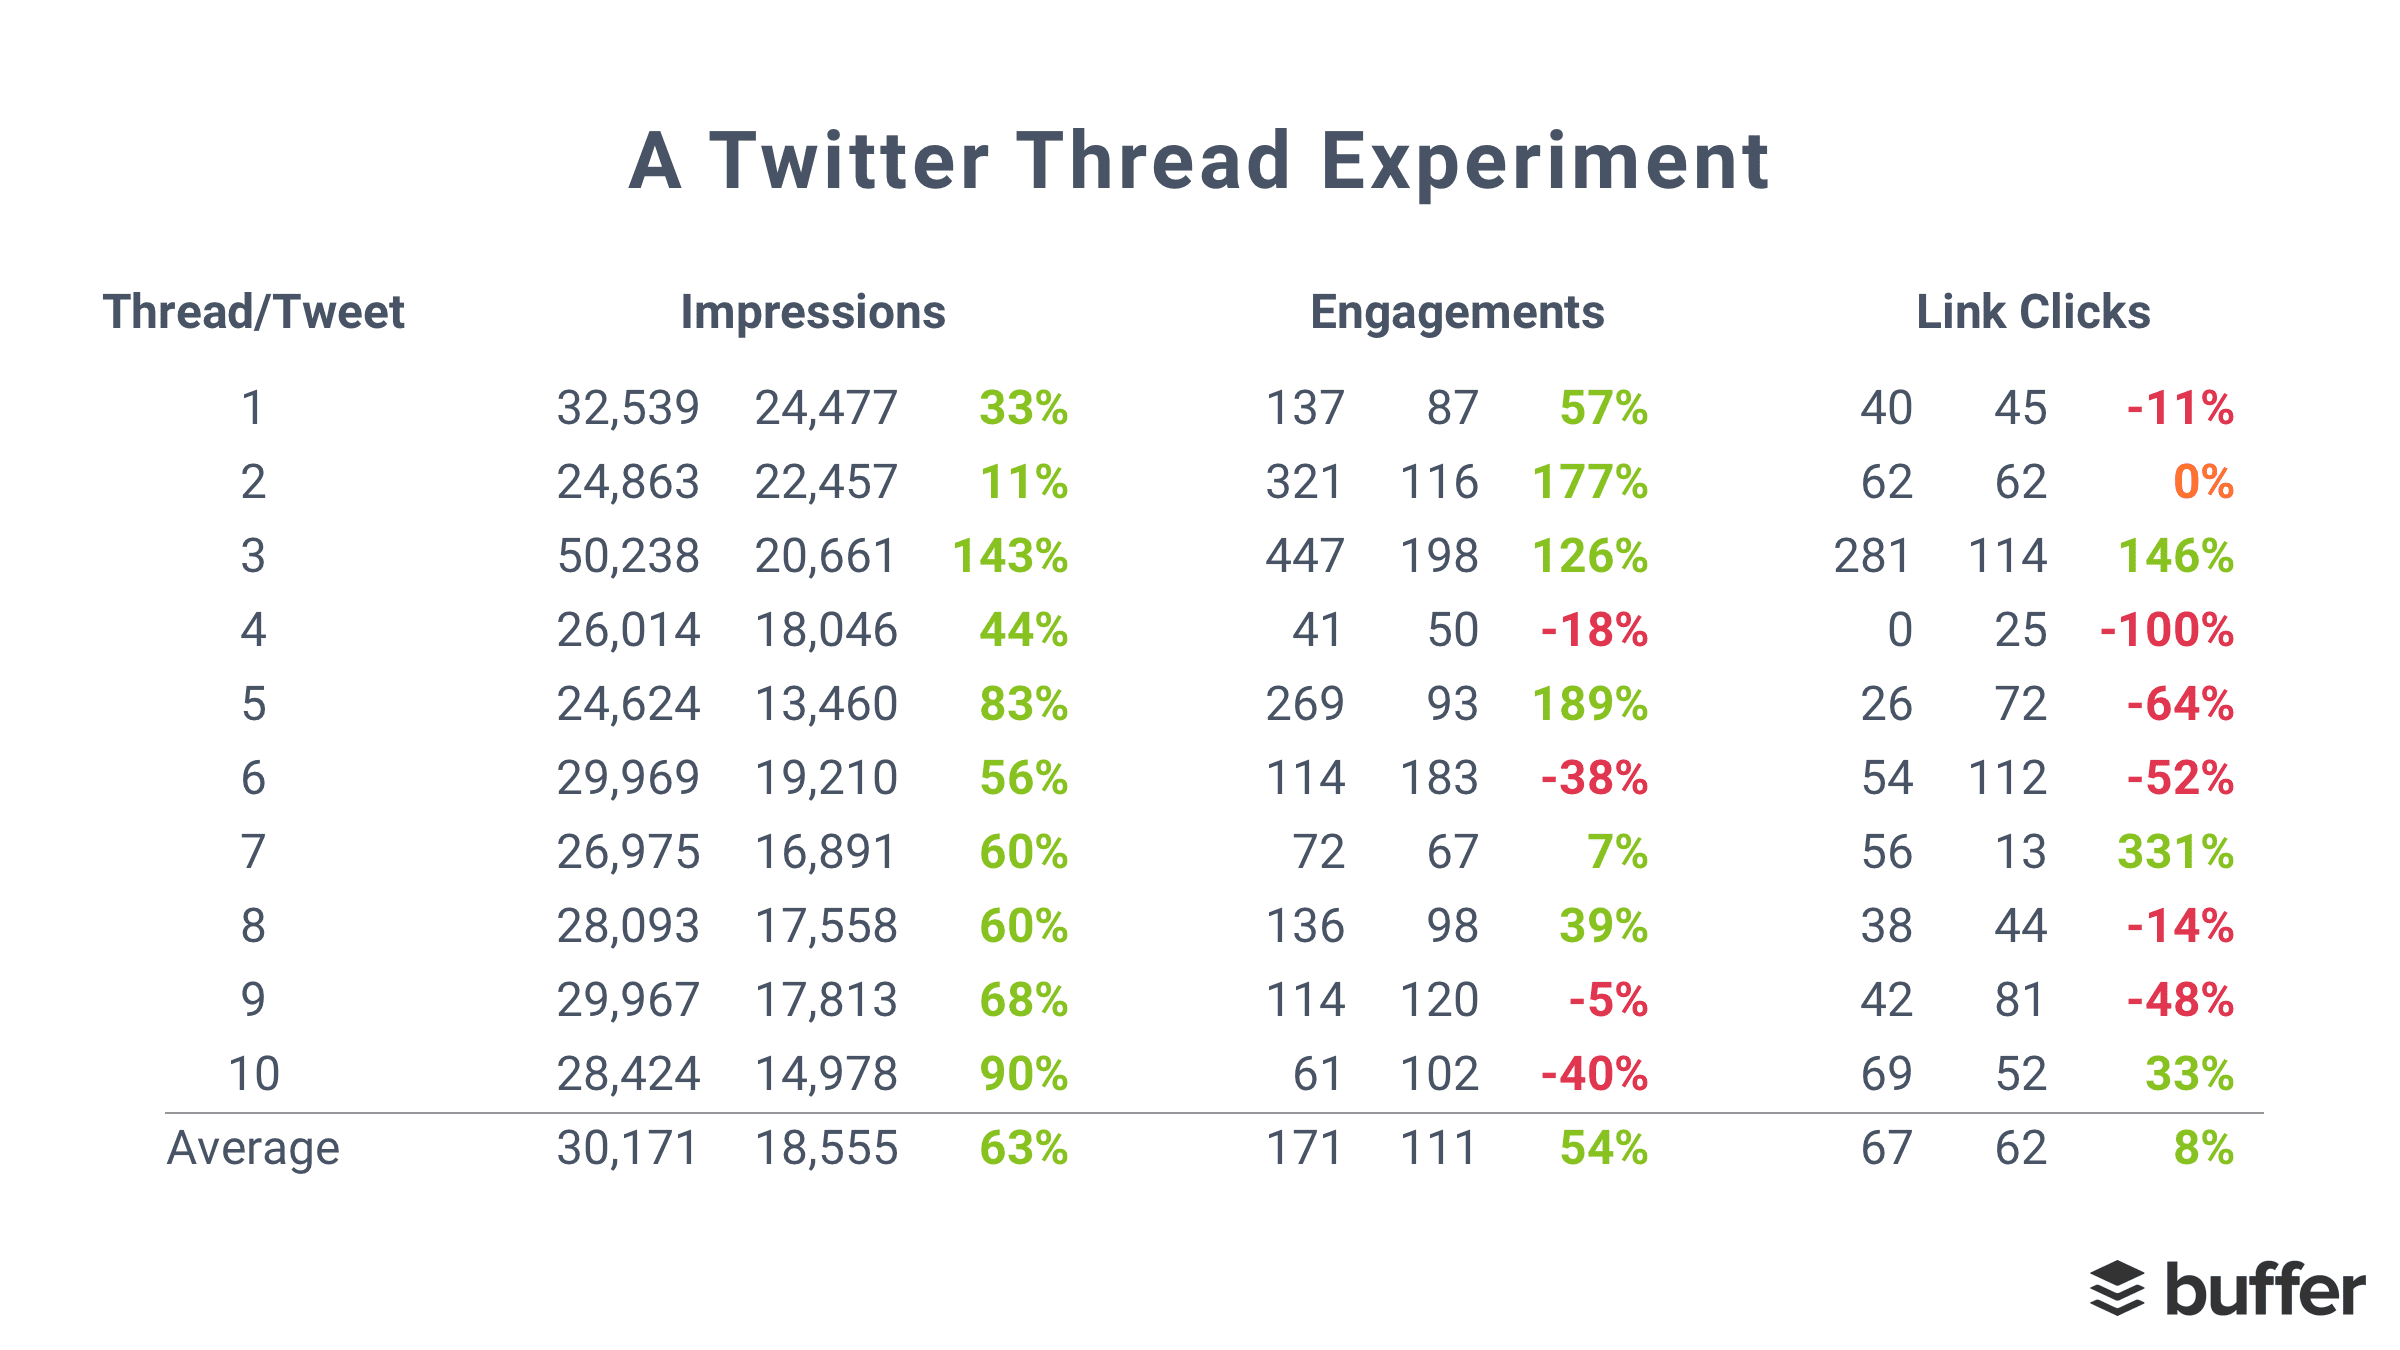 Twitter thread experiment data